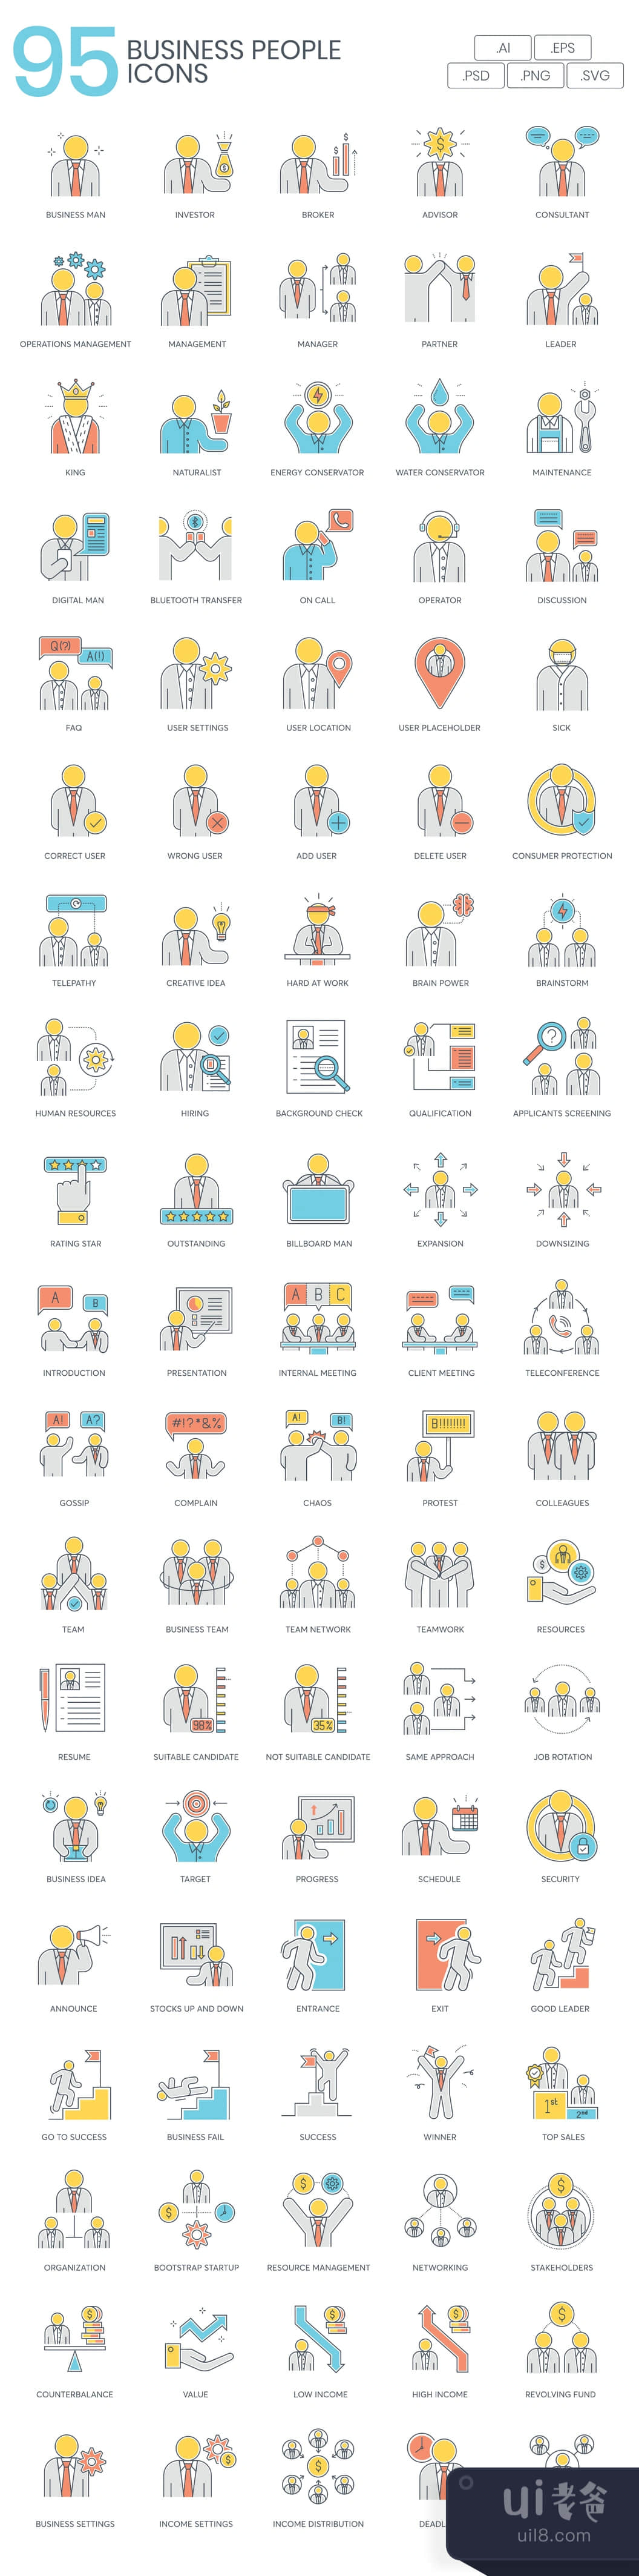 商业人物线条图标 (Business People Line Icons)插图